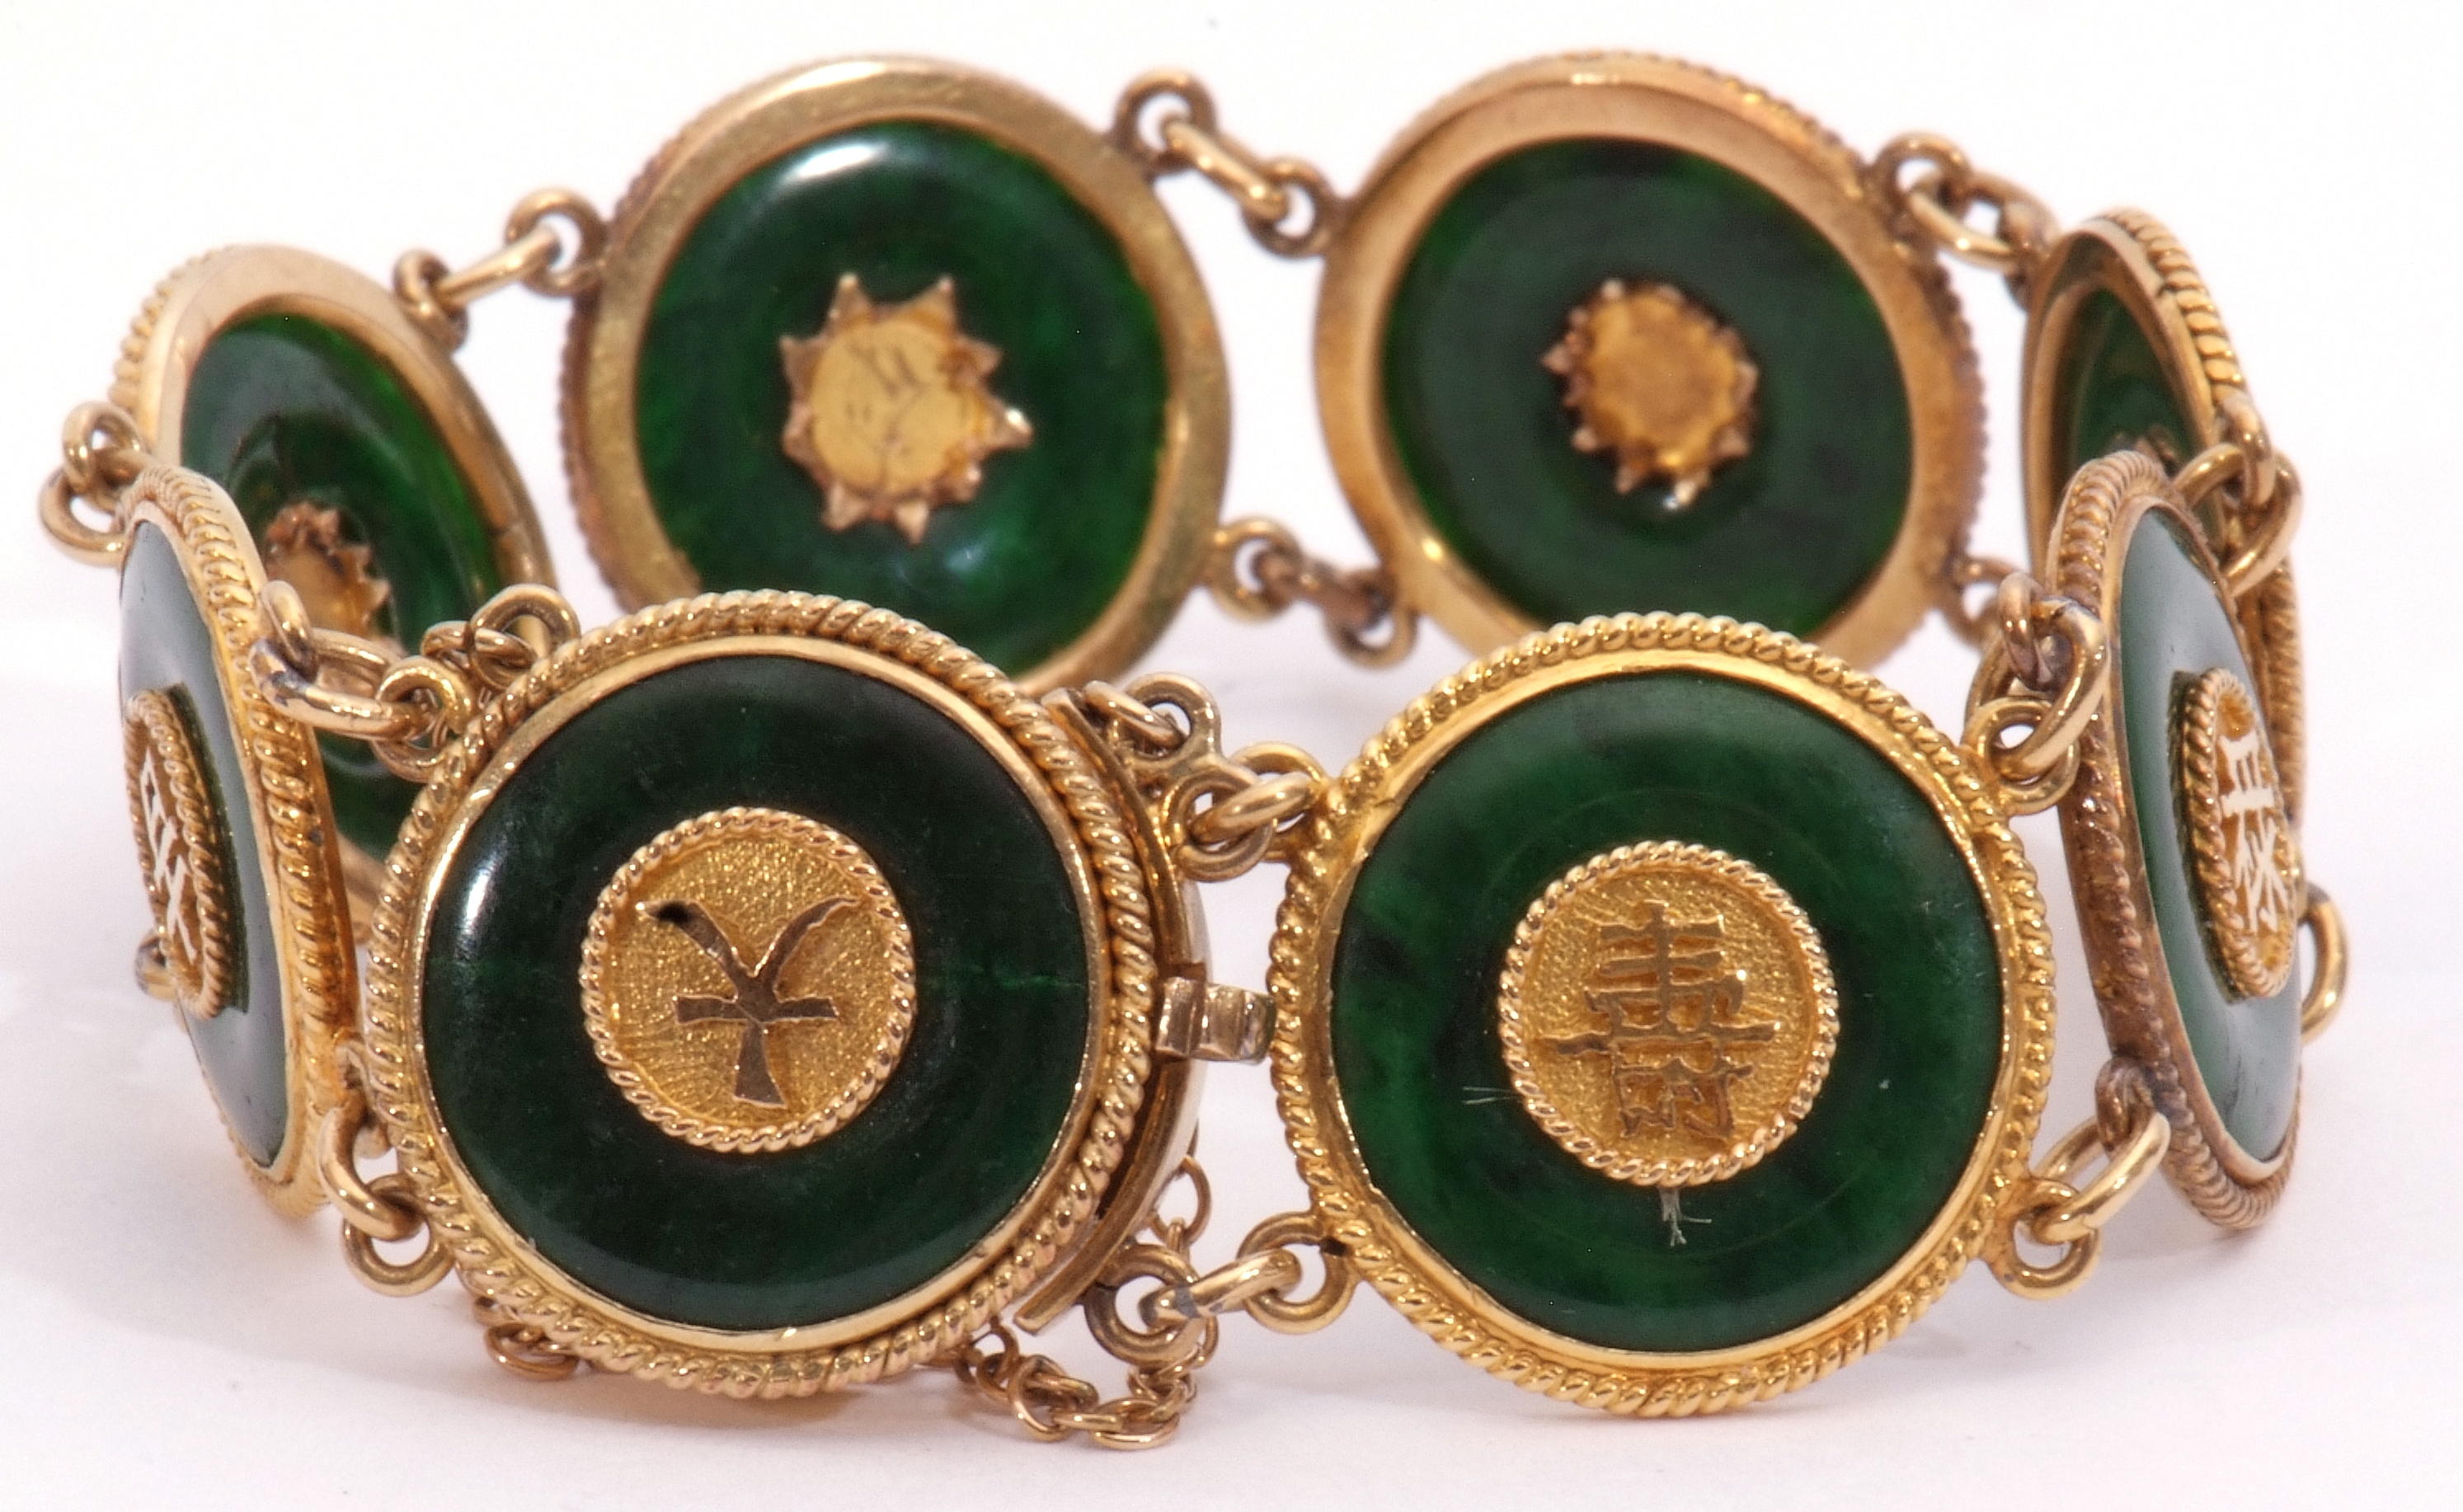 Chinese high grade yellow metal and jade bracelet comprising eight circular jade discs, each